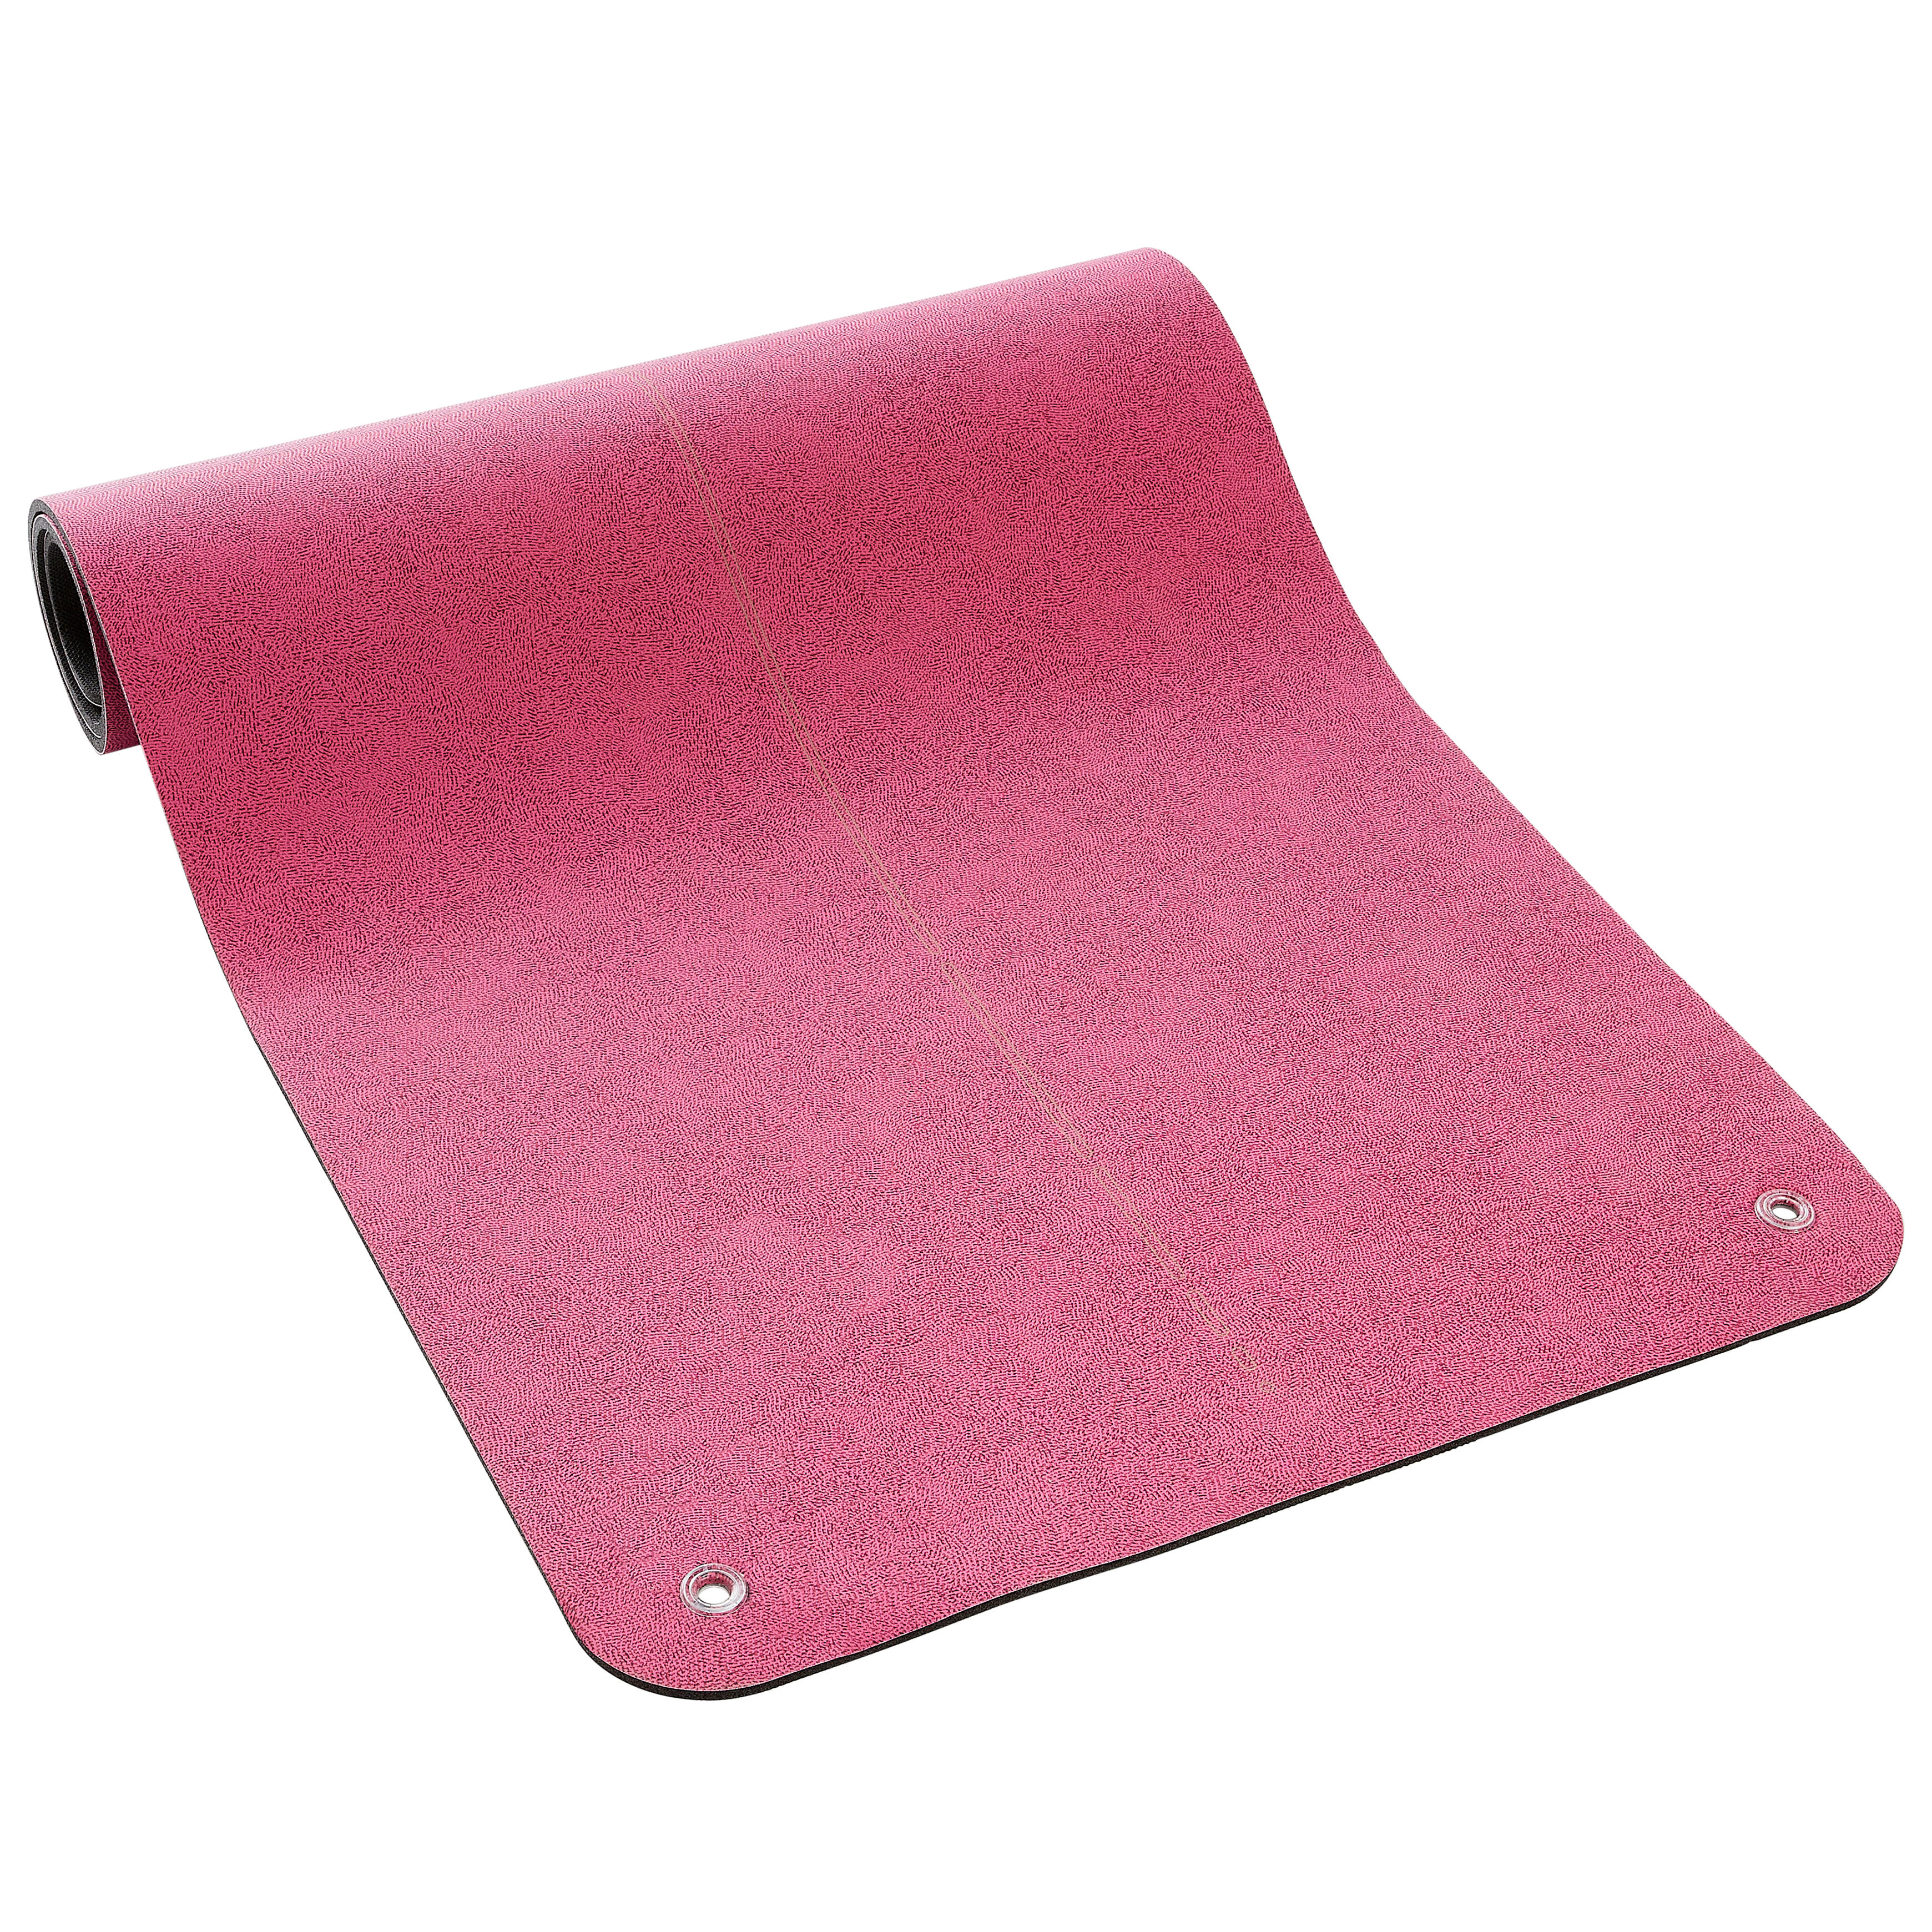 Fitness Tone Floor Mat Size S - 500 Pink - Blush pink, Purple - Domyos -  Decathlon